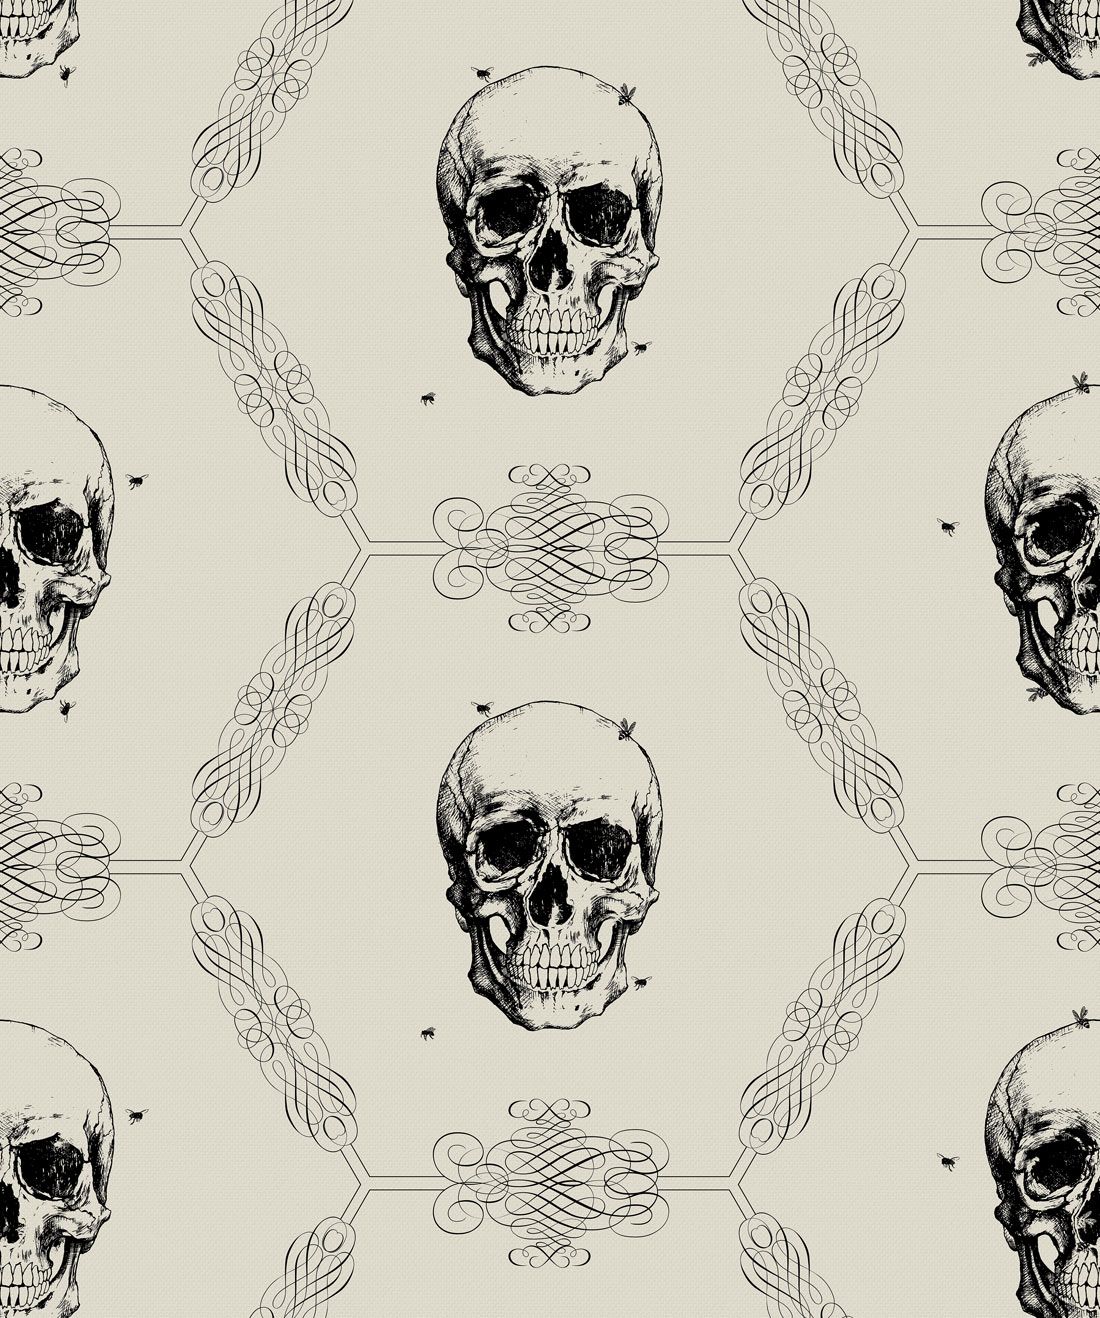 Skull & Bee in Bone is a gothic wallpaper